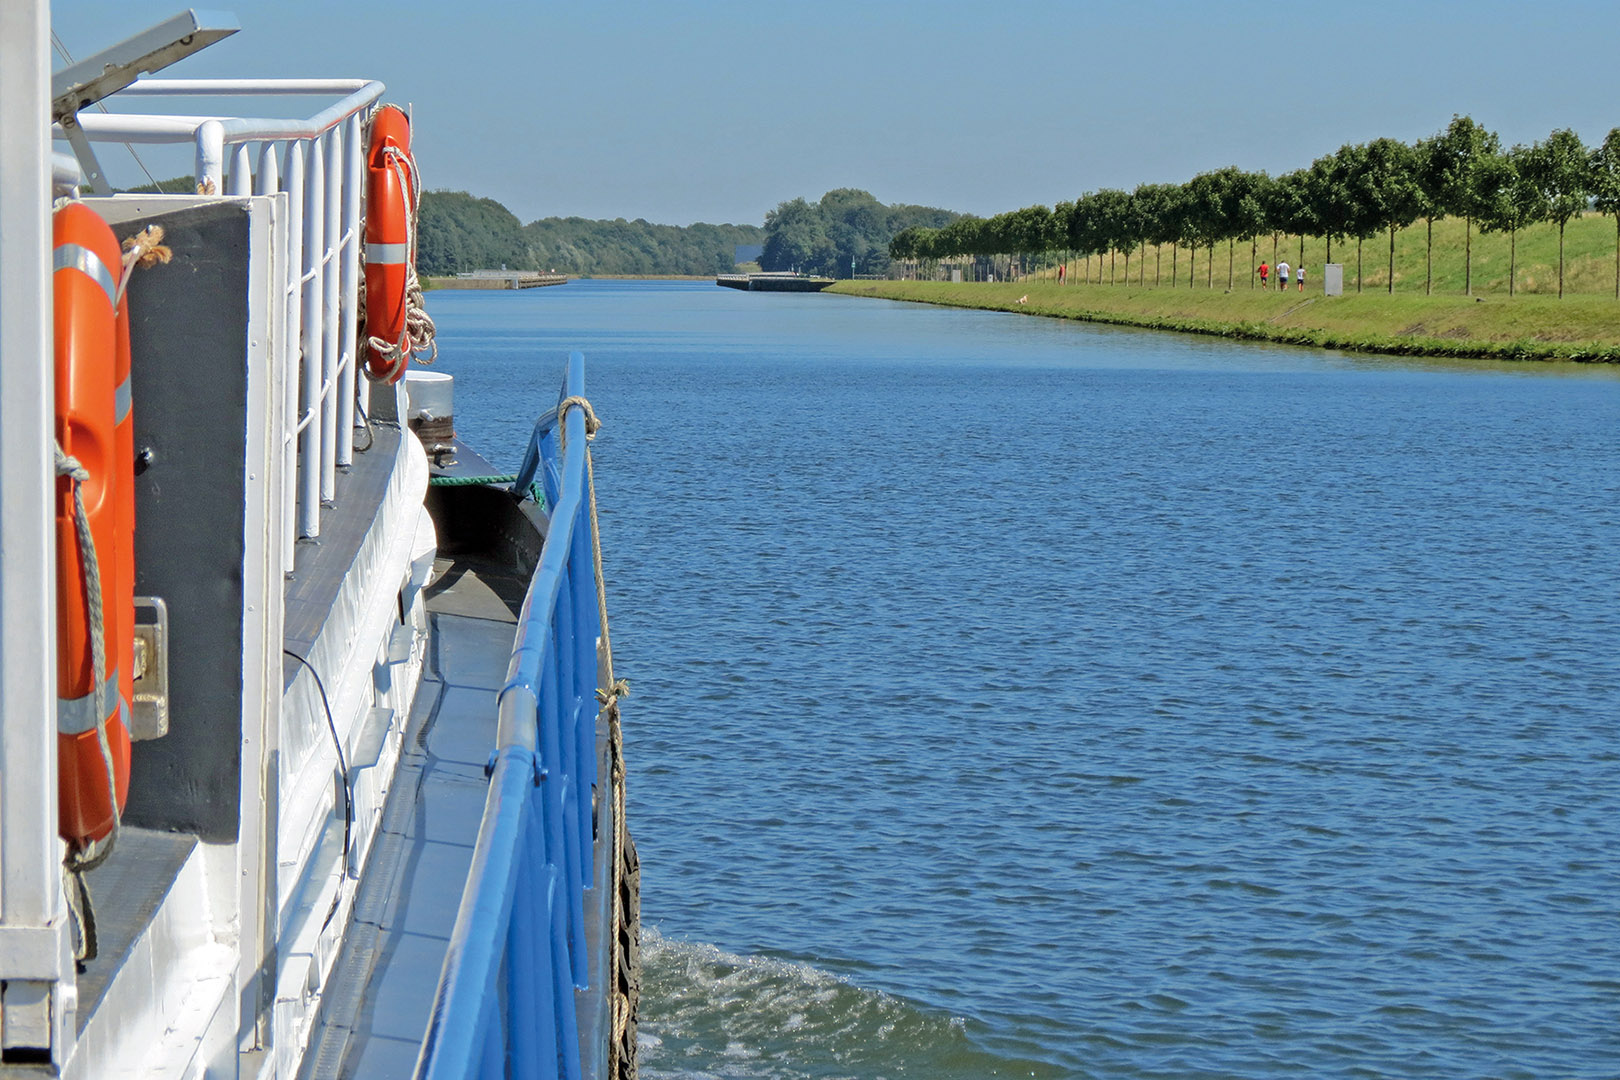 fotoreeks Boottocht van Strépy-Thieu naar Halle, inclusief scheepslift Strépy-Thieu en Hellend Vlak Ronquières.